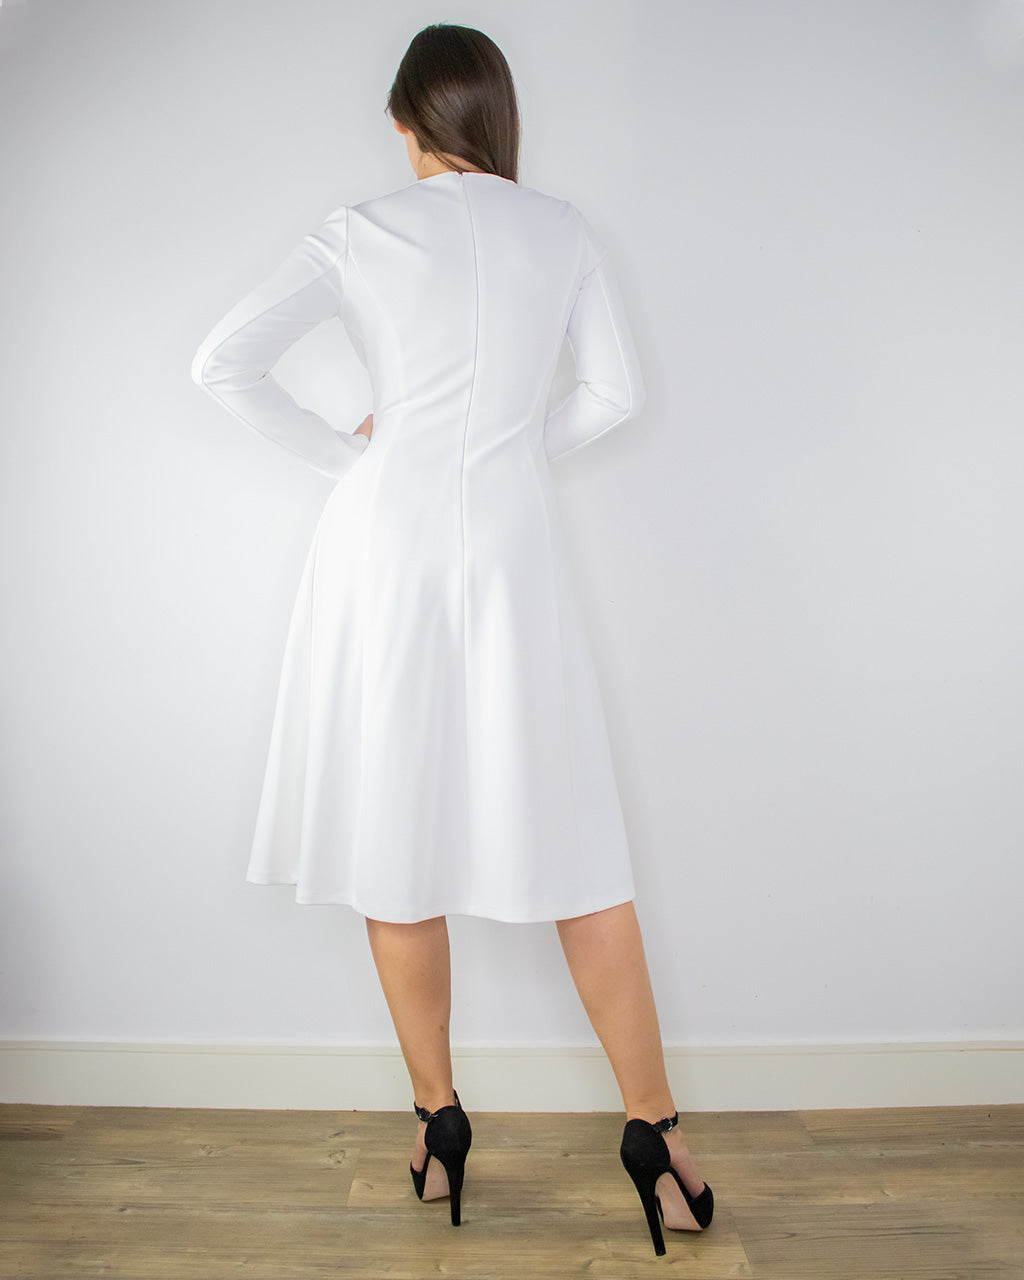 Nora White Midi Dress with Sleeves - White Skater Dress